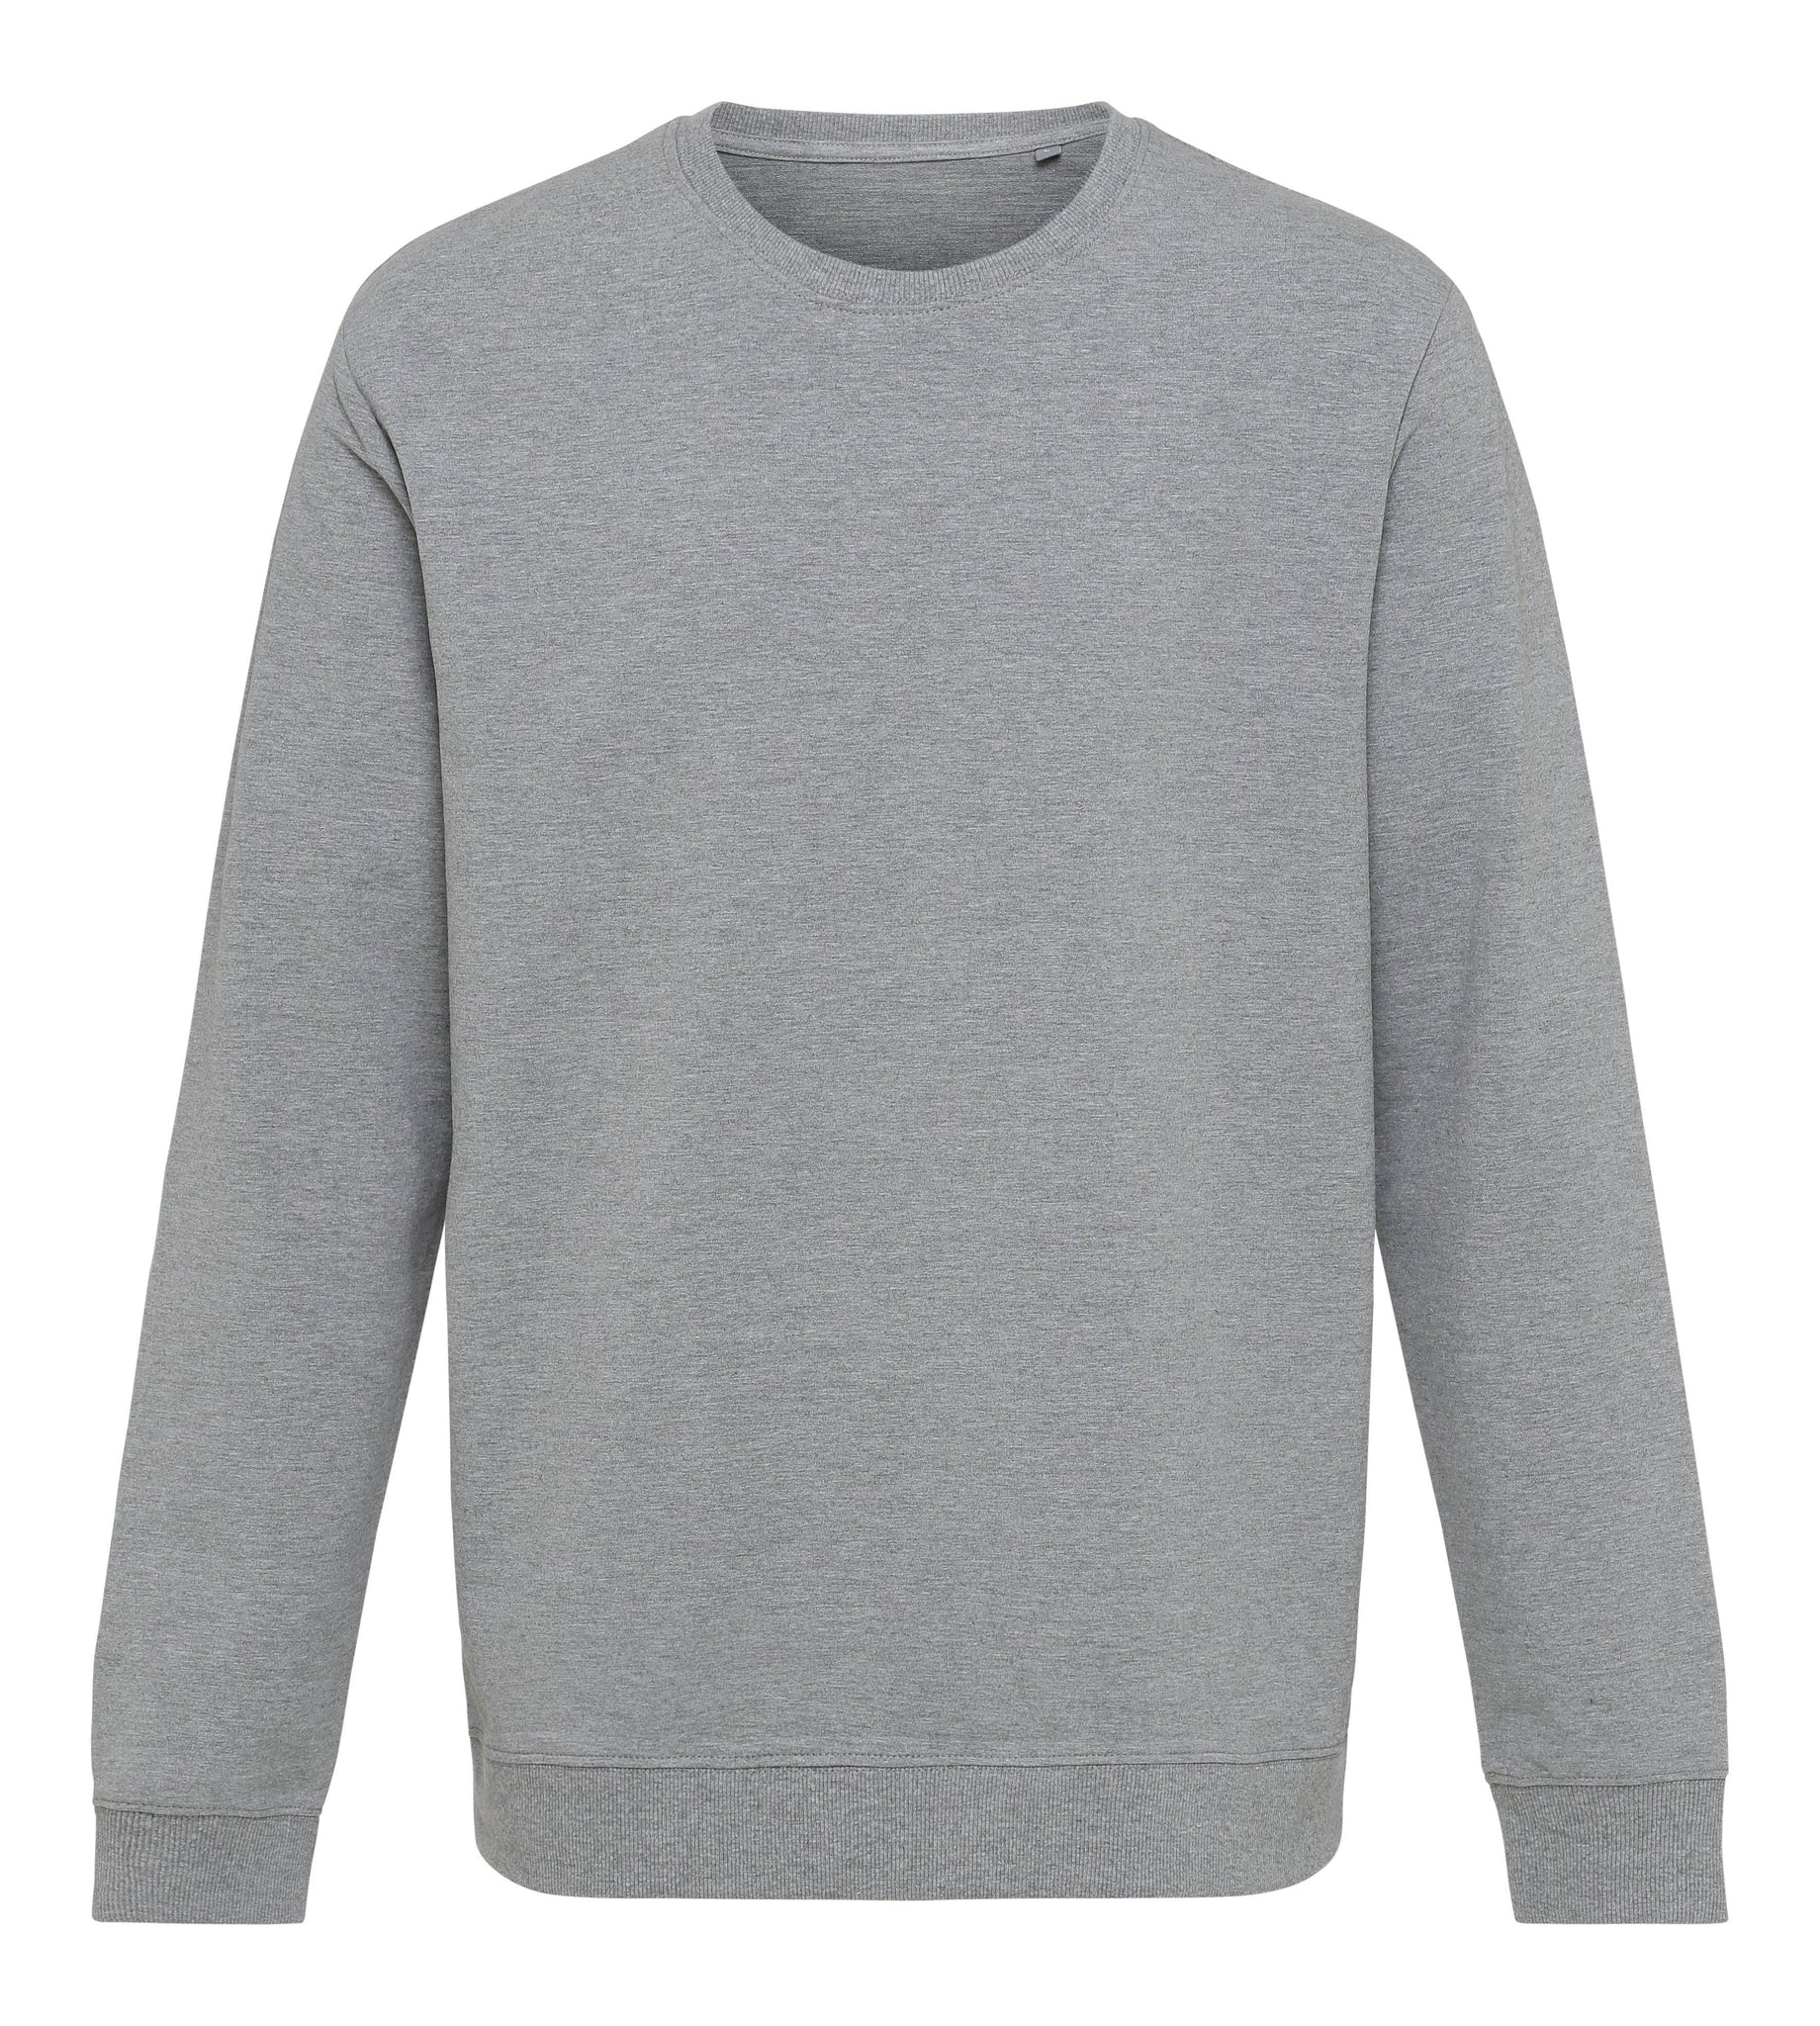 LabelFree SPORT CREW NECK - Sweatshirts - JA Profil 